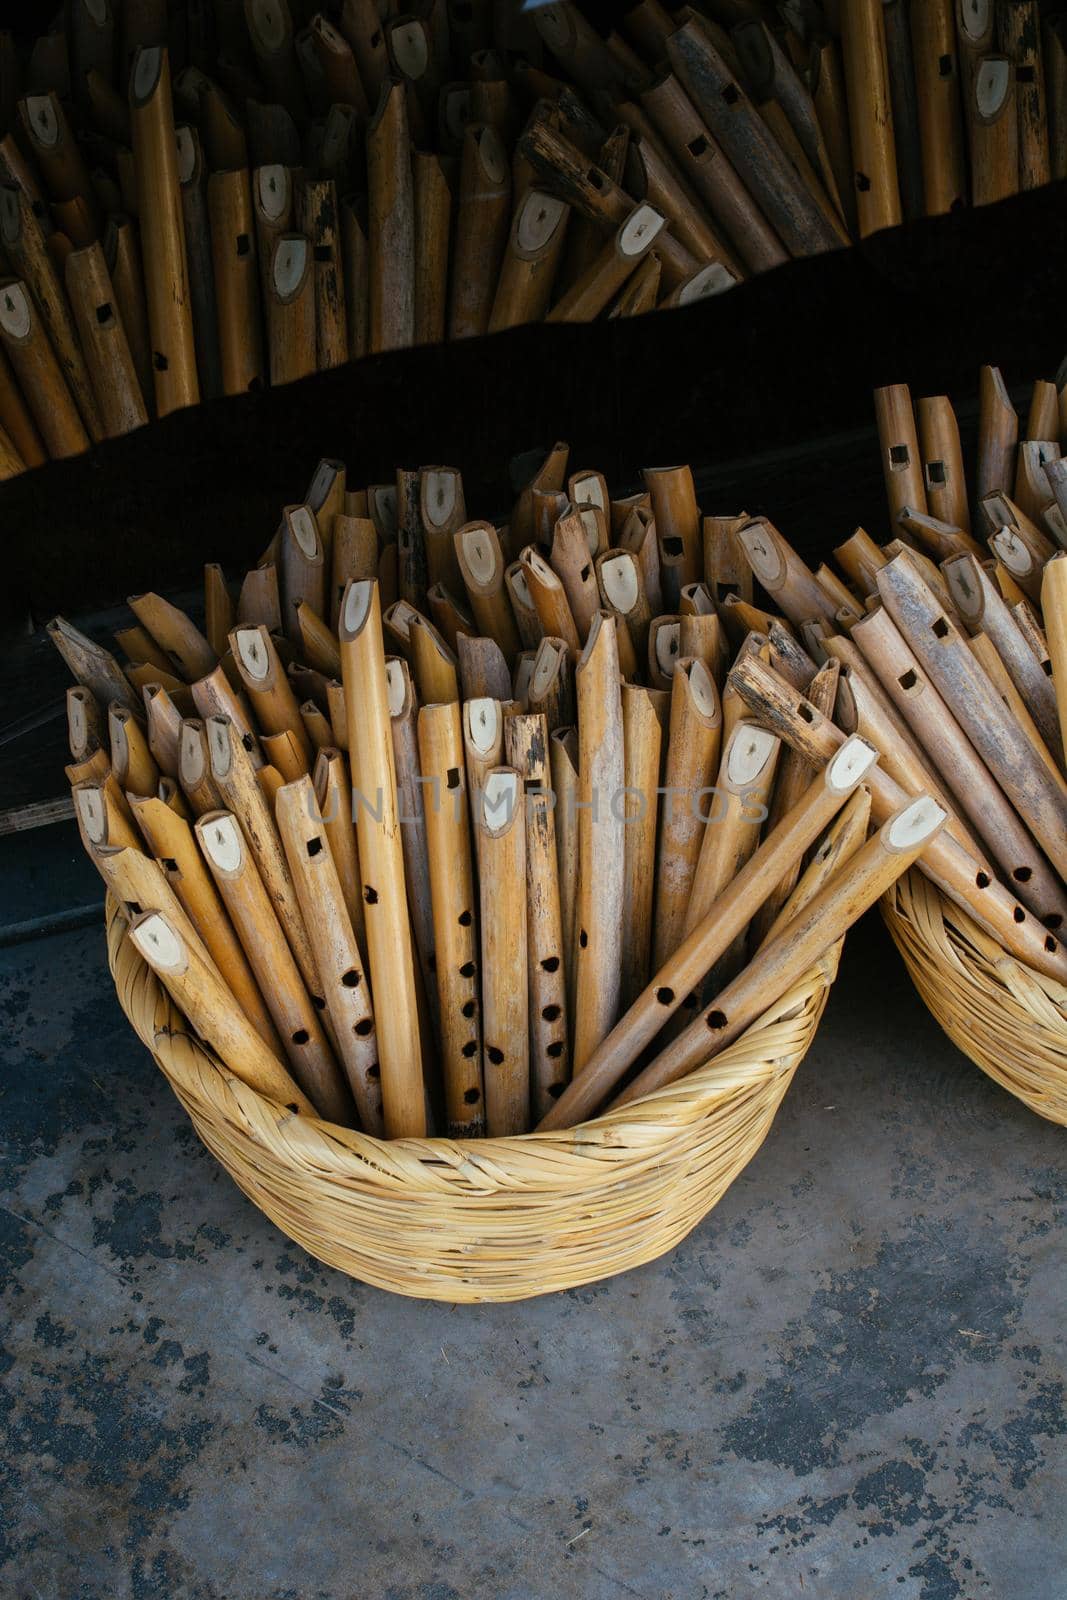 Dozens of handmade wooden flutes in display by berkay